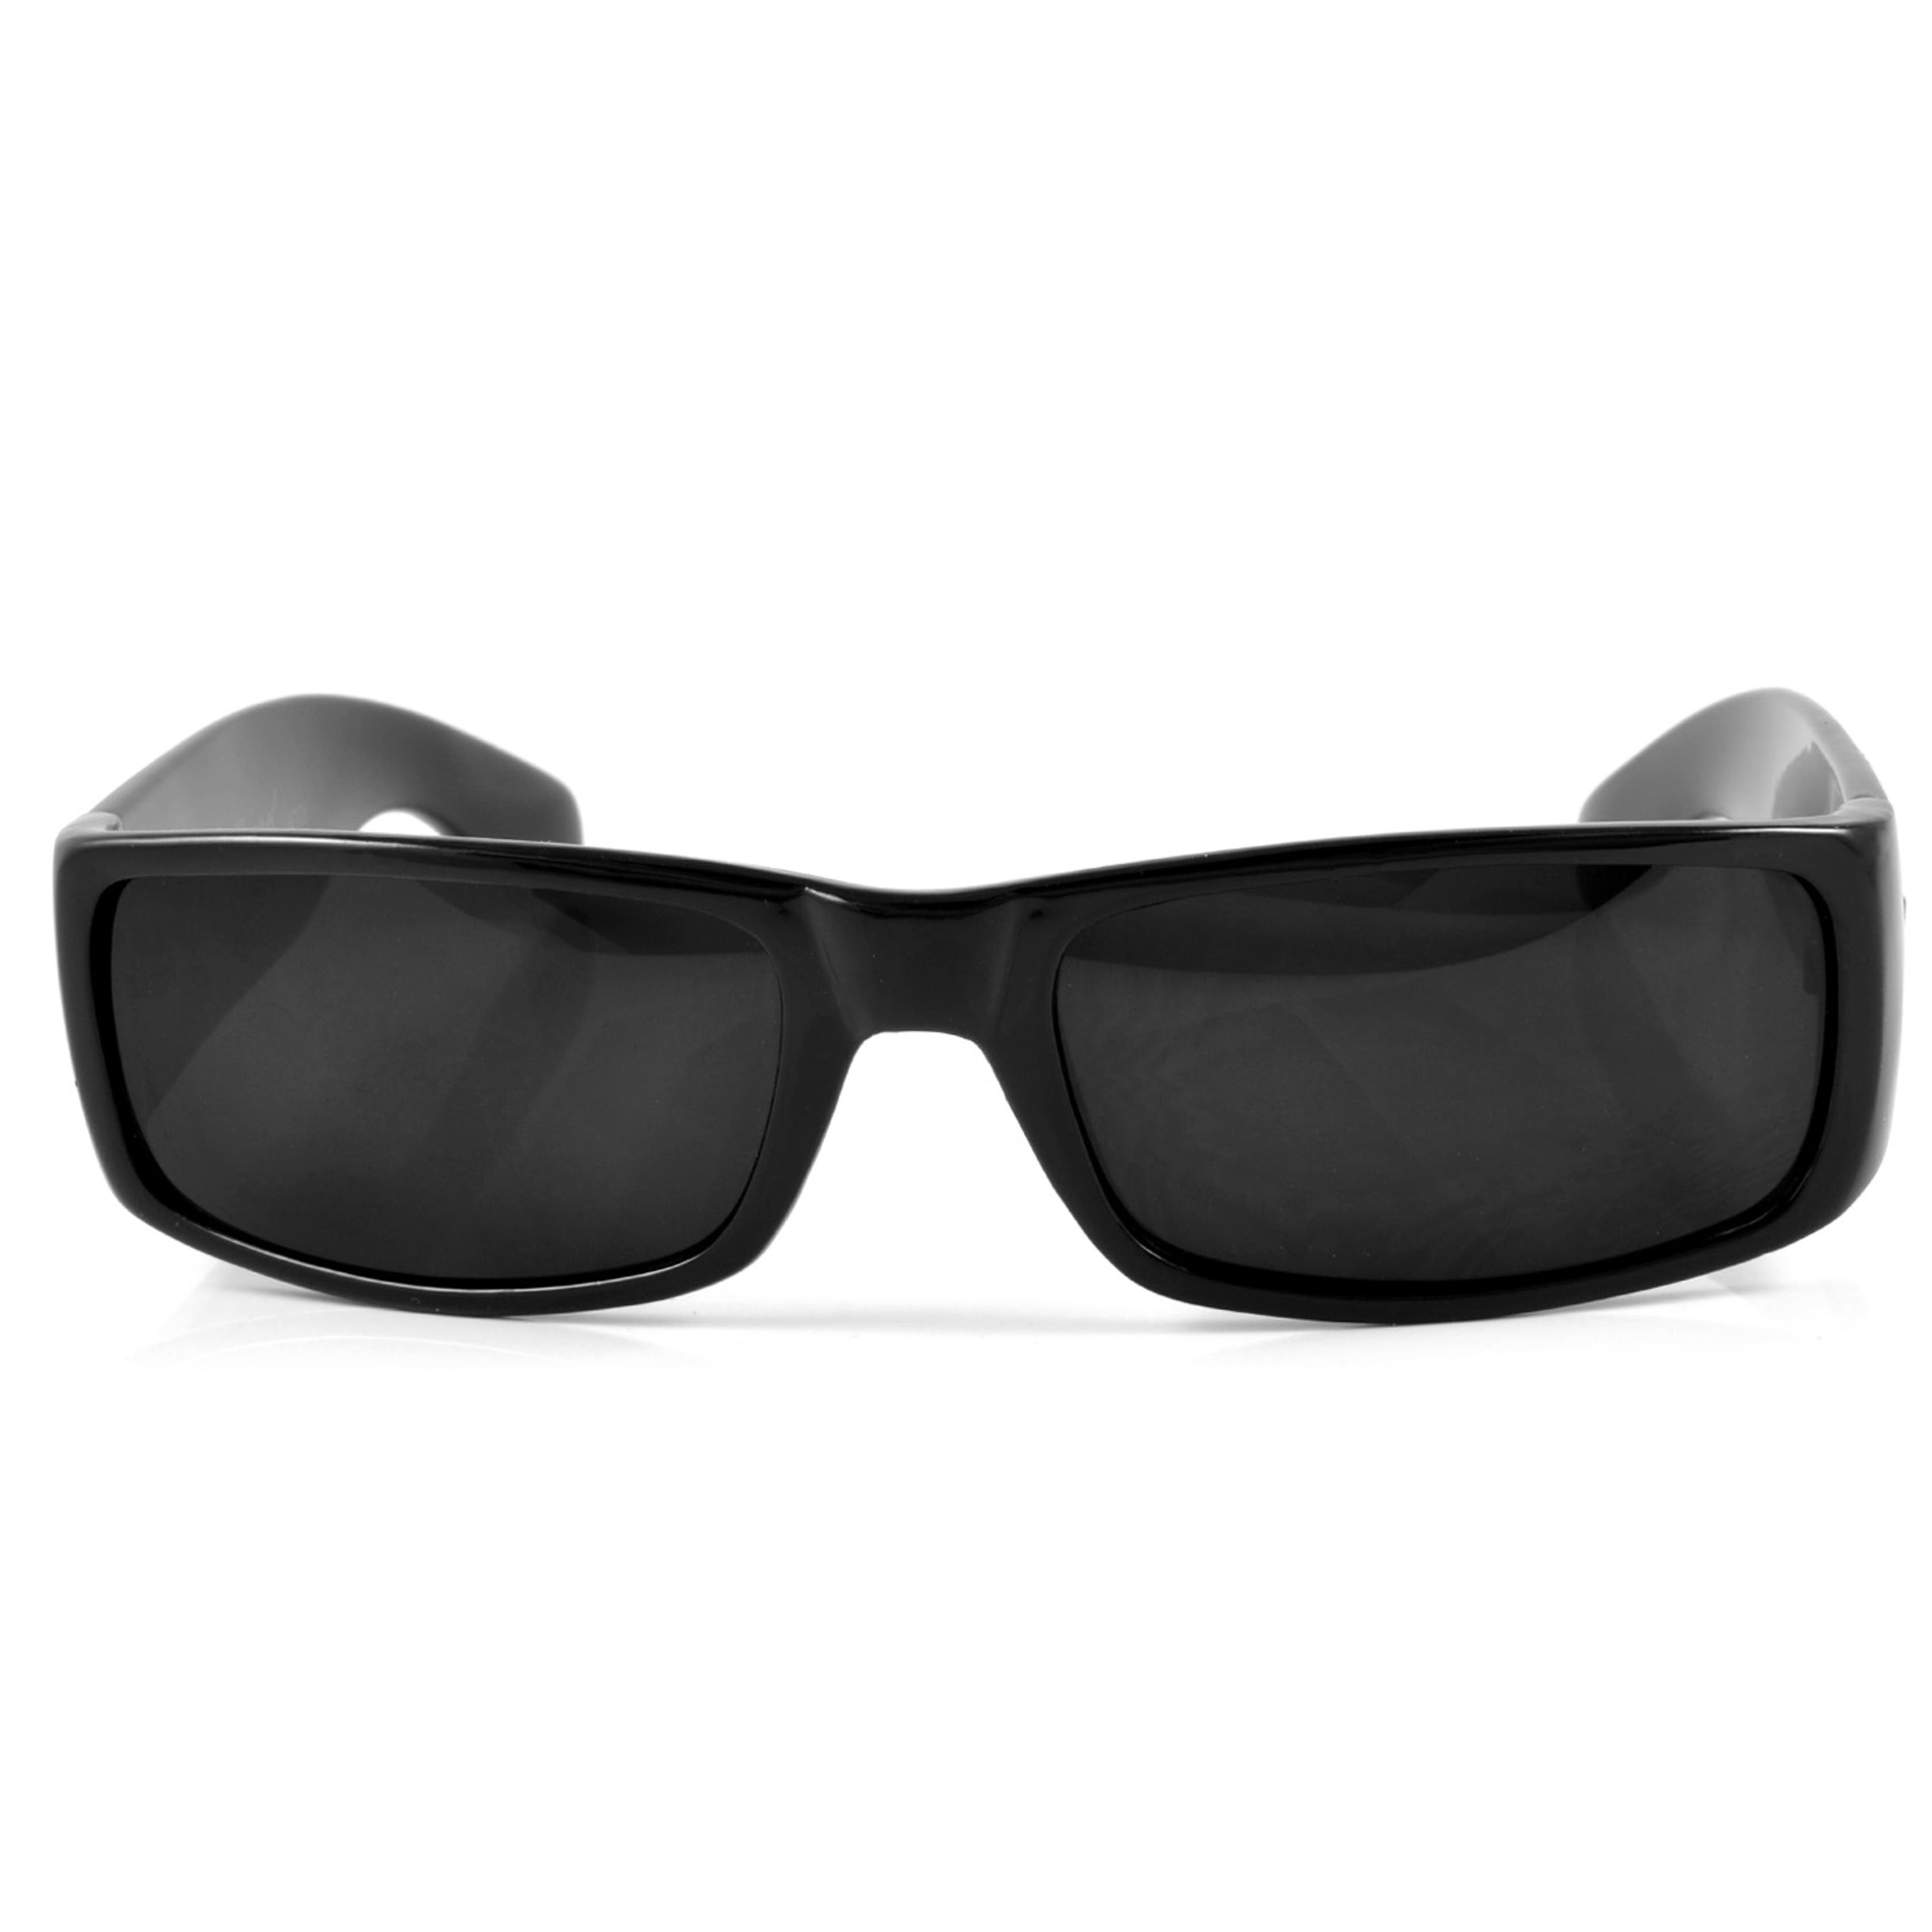 Black Classic Biker Sunglasses, In stock!